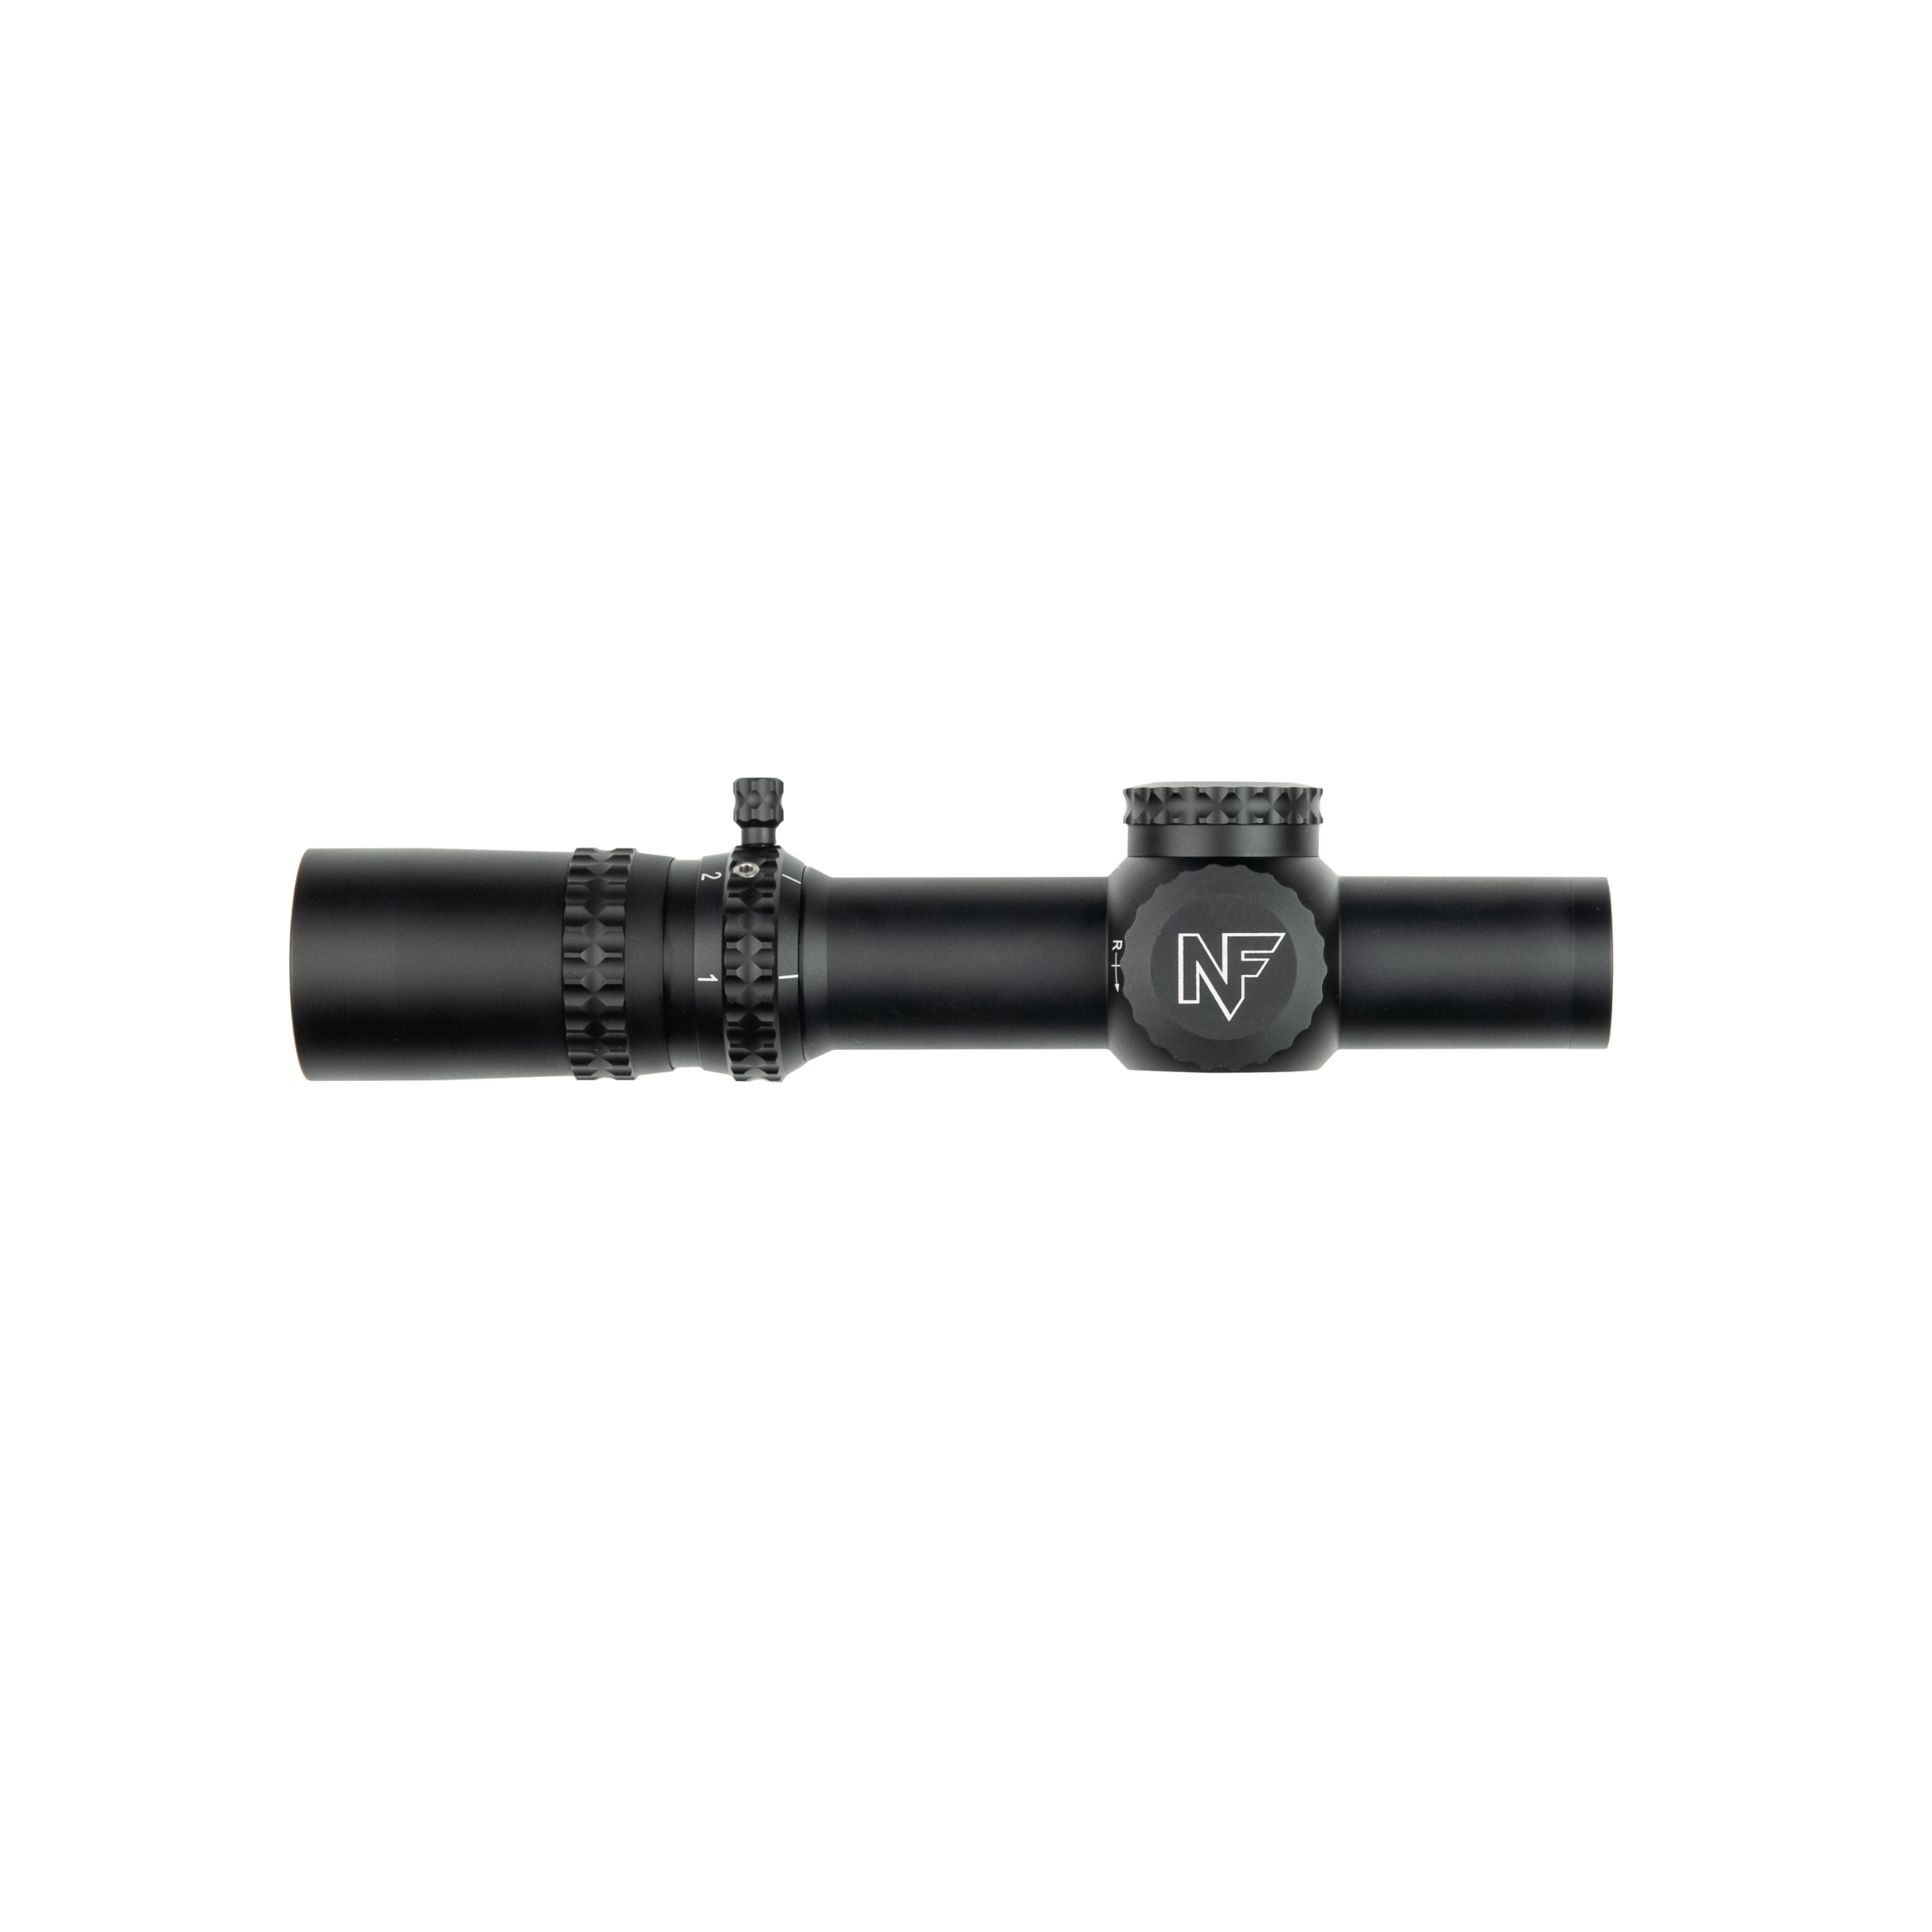 ATACR – 1-8x24mm F1